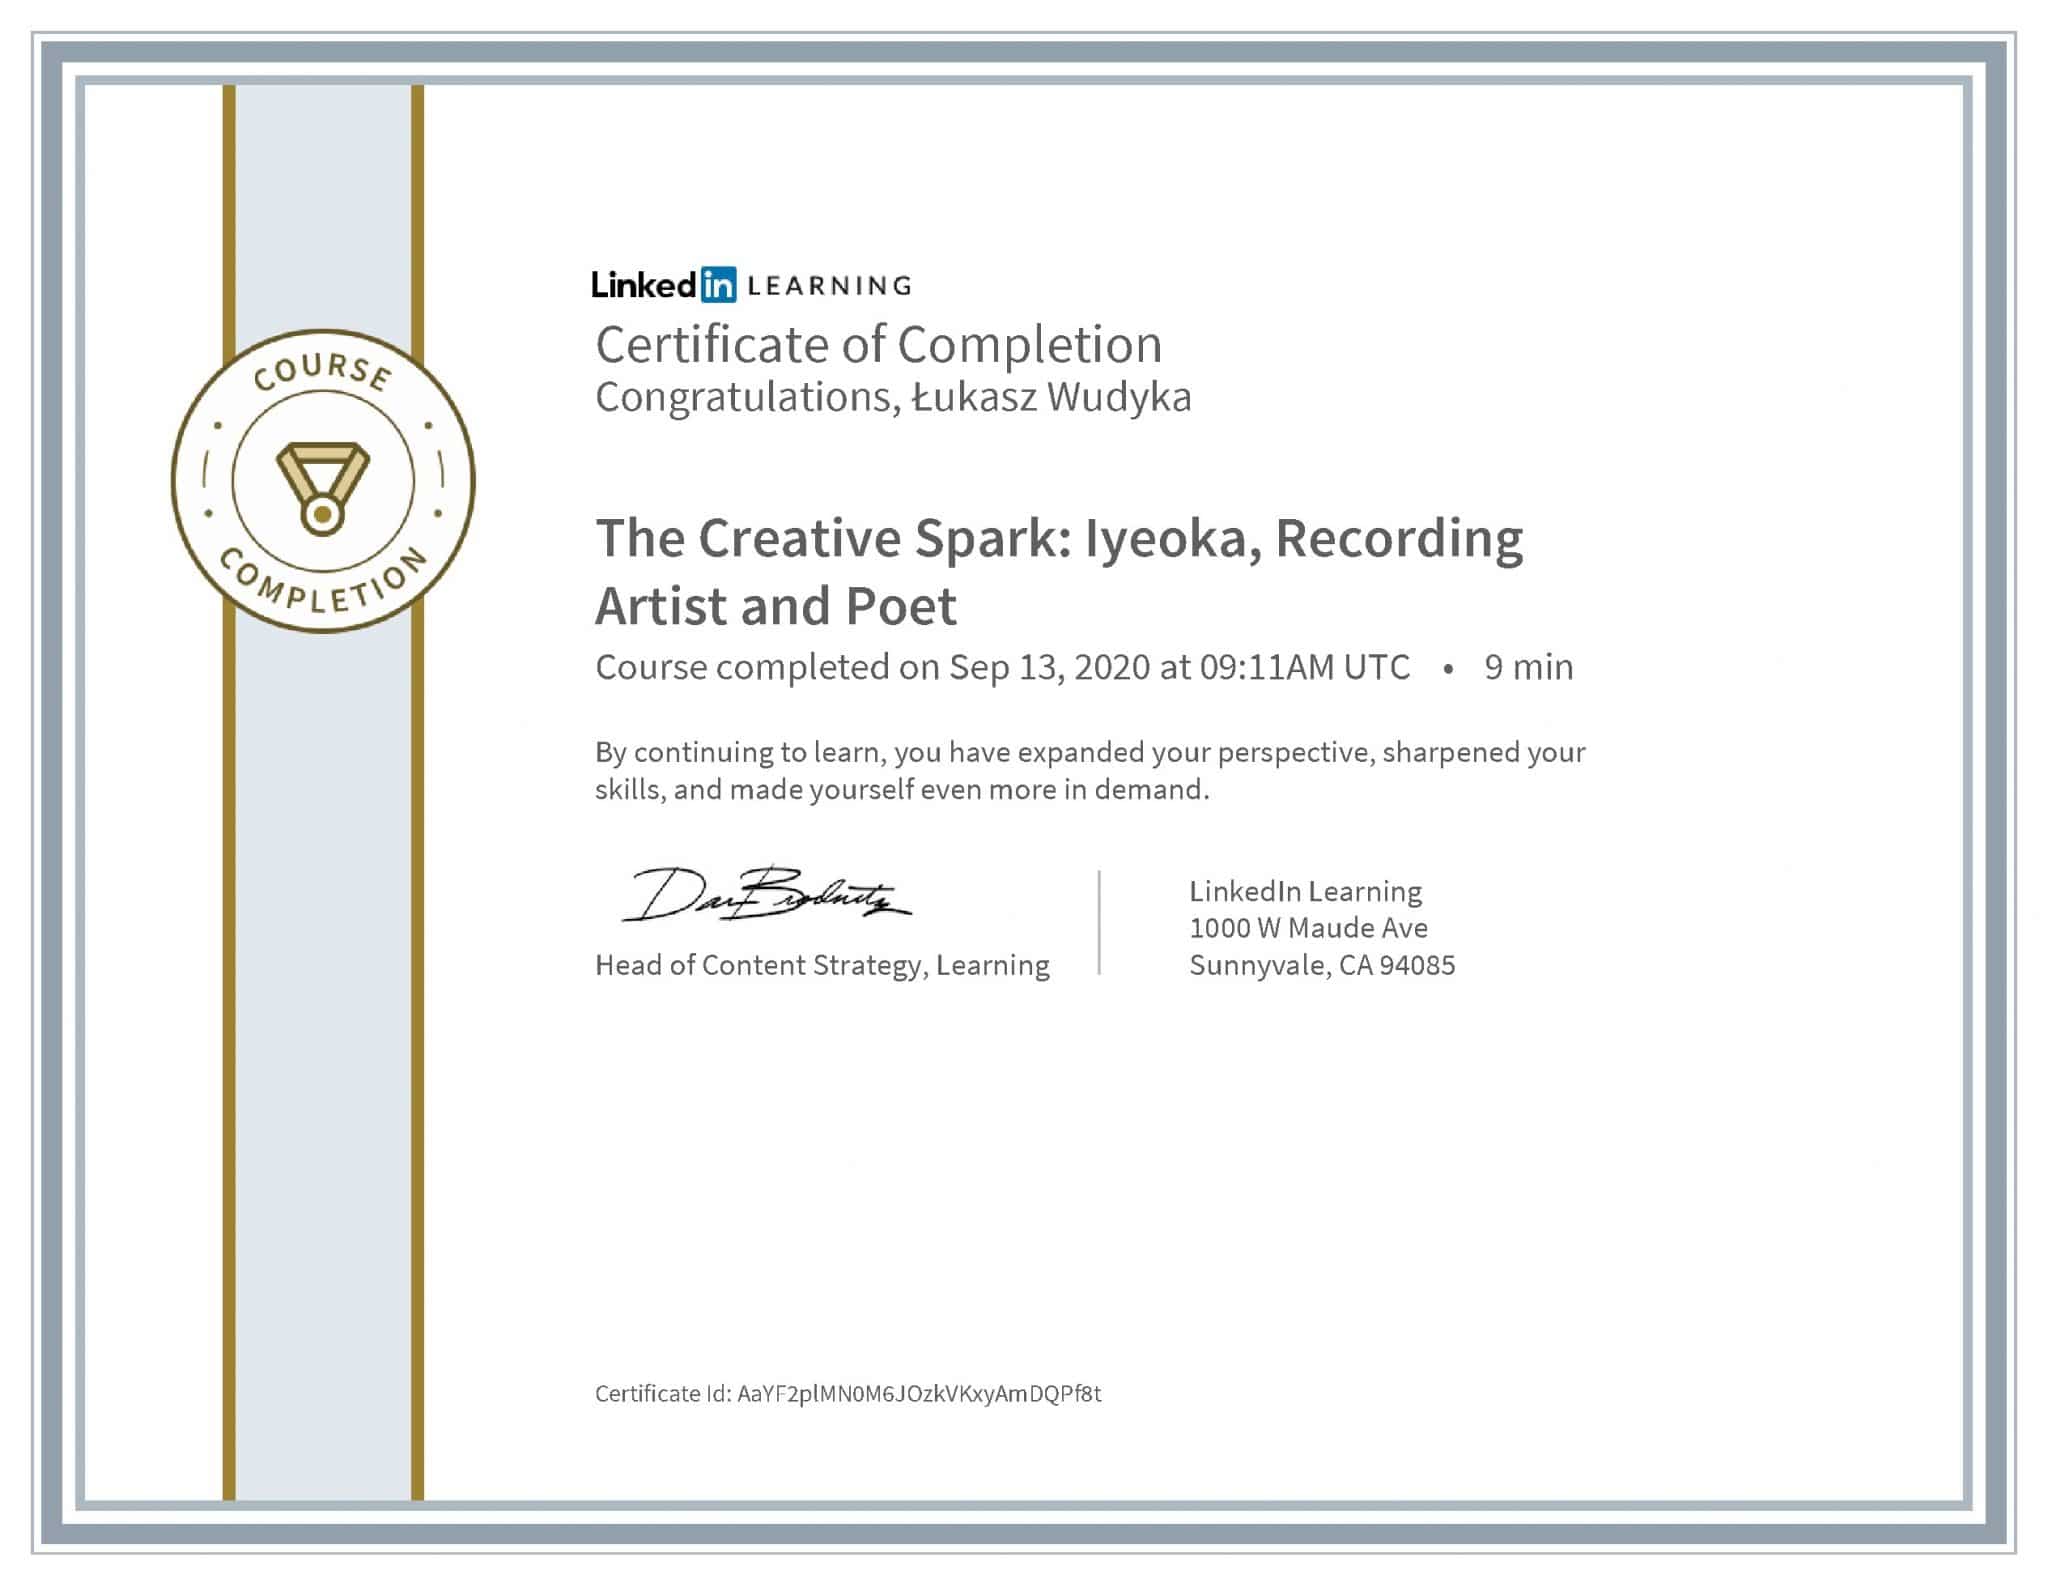 Łukasz Wudyka certyfikat LinkedIn The Creative Spark: lyeoka, Recording Artist and Poet